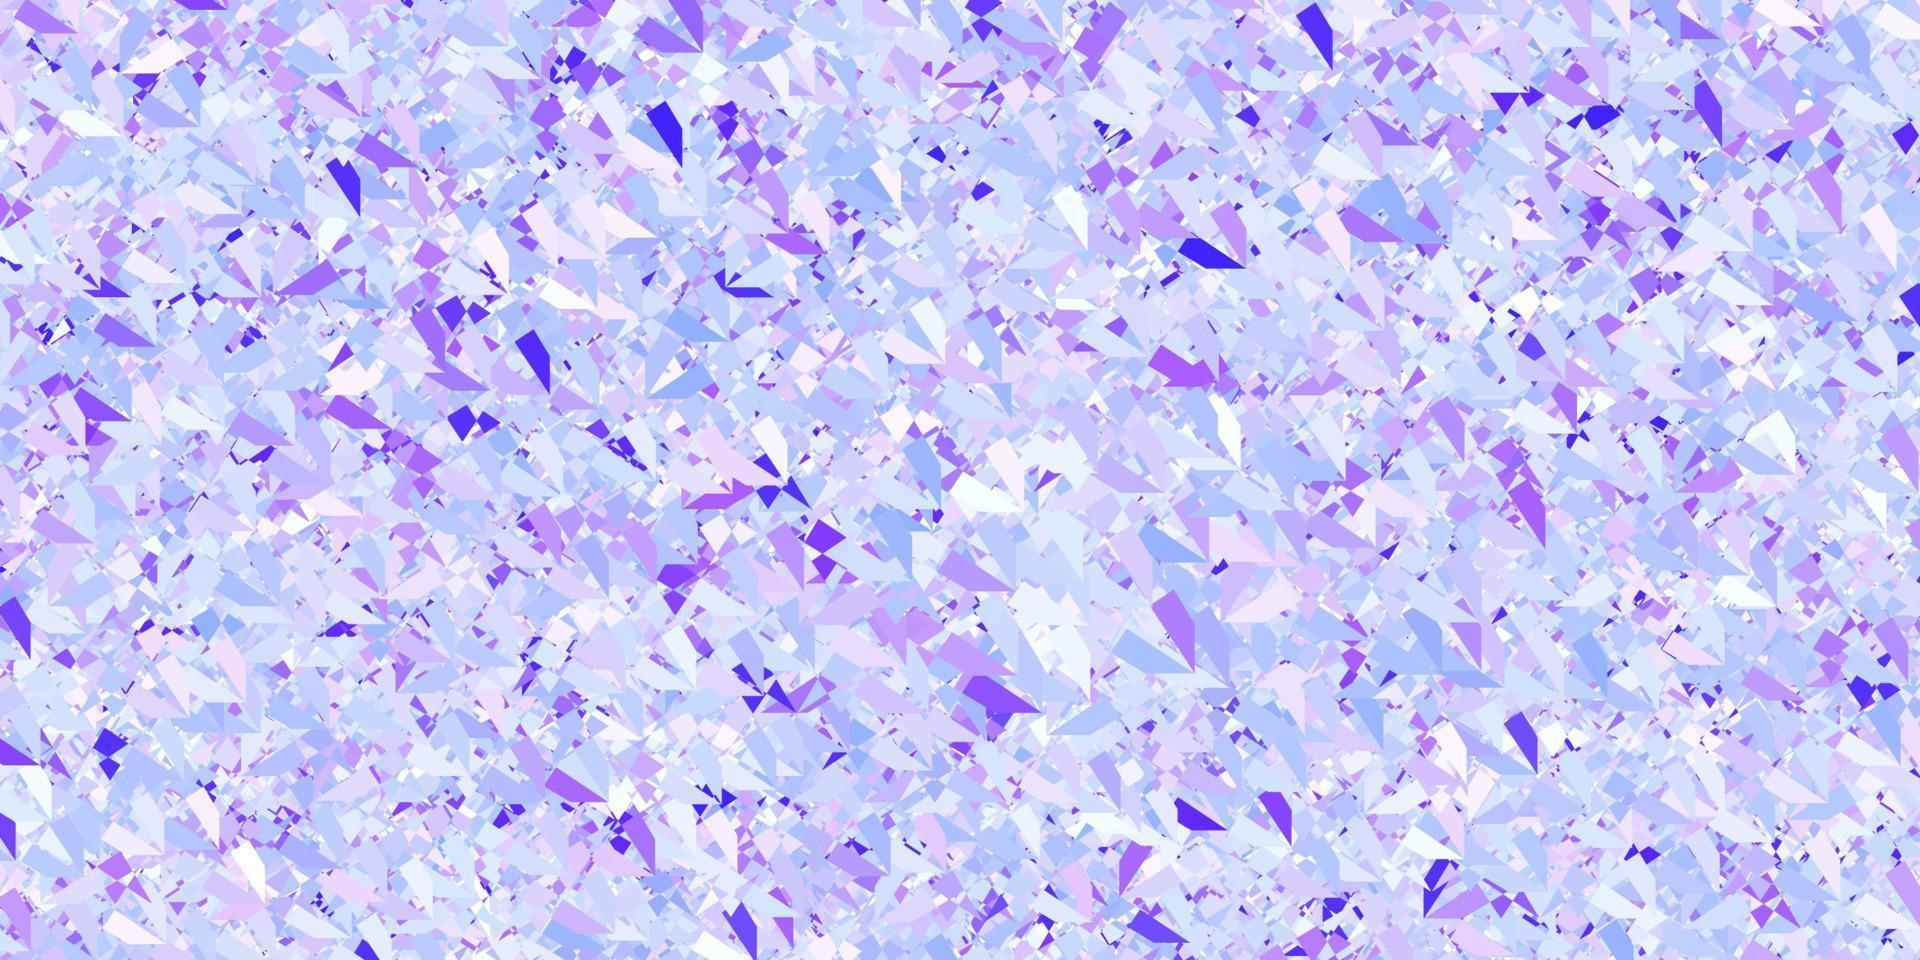 patrón de vector púrpura oscuro con formas poligonales.